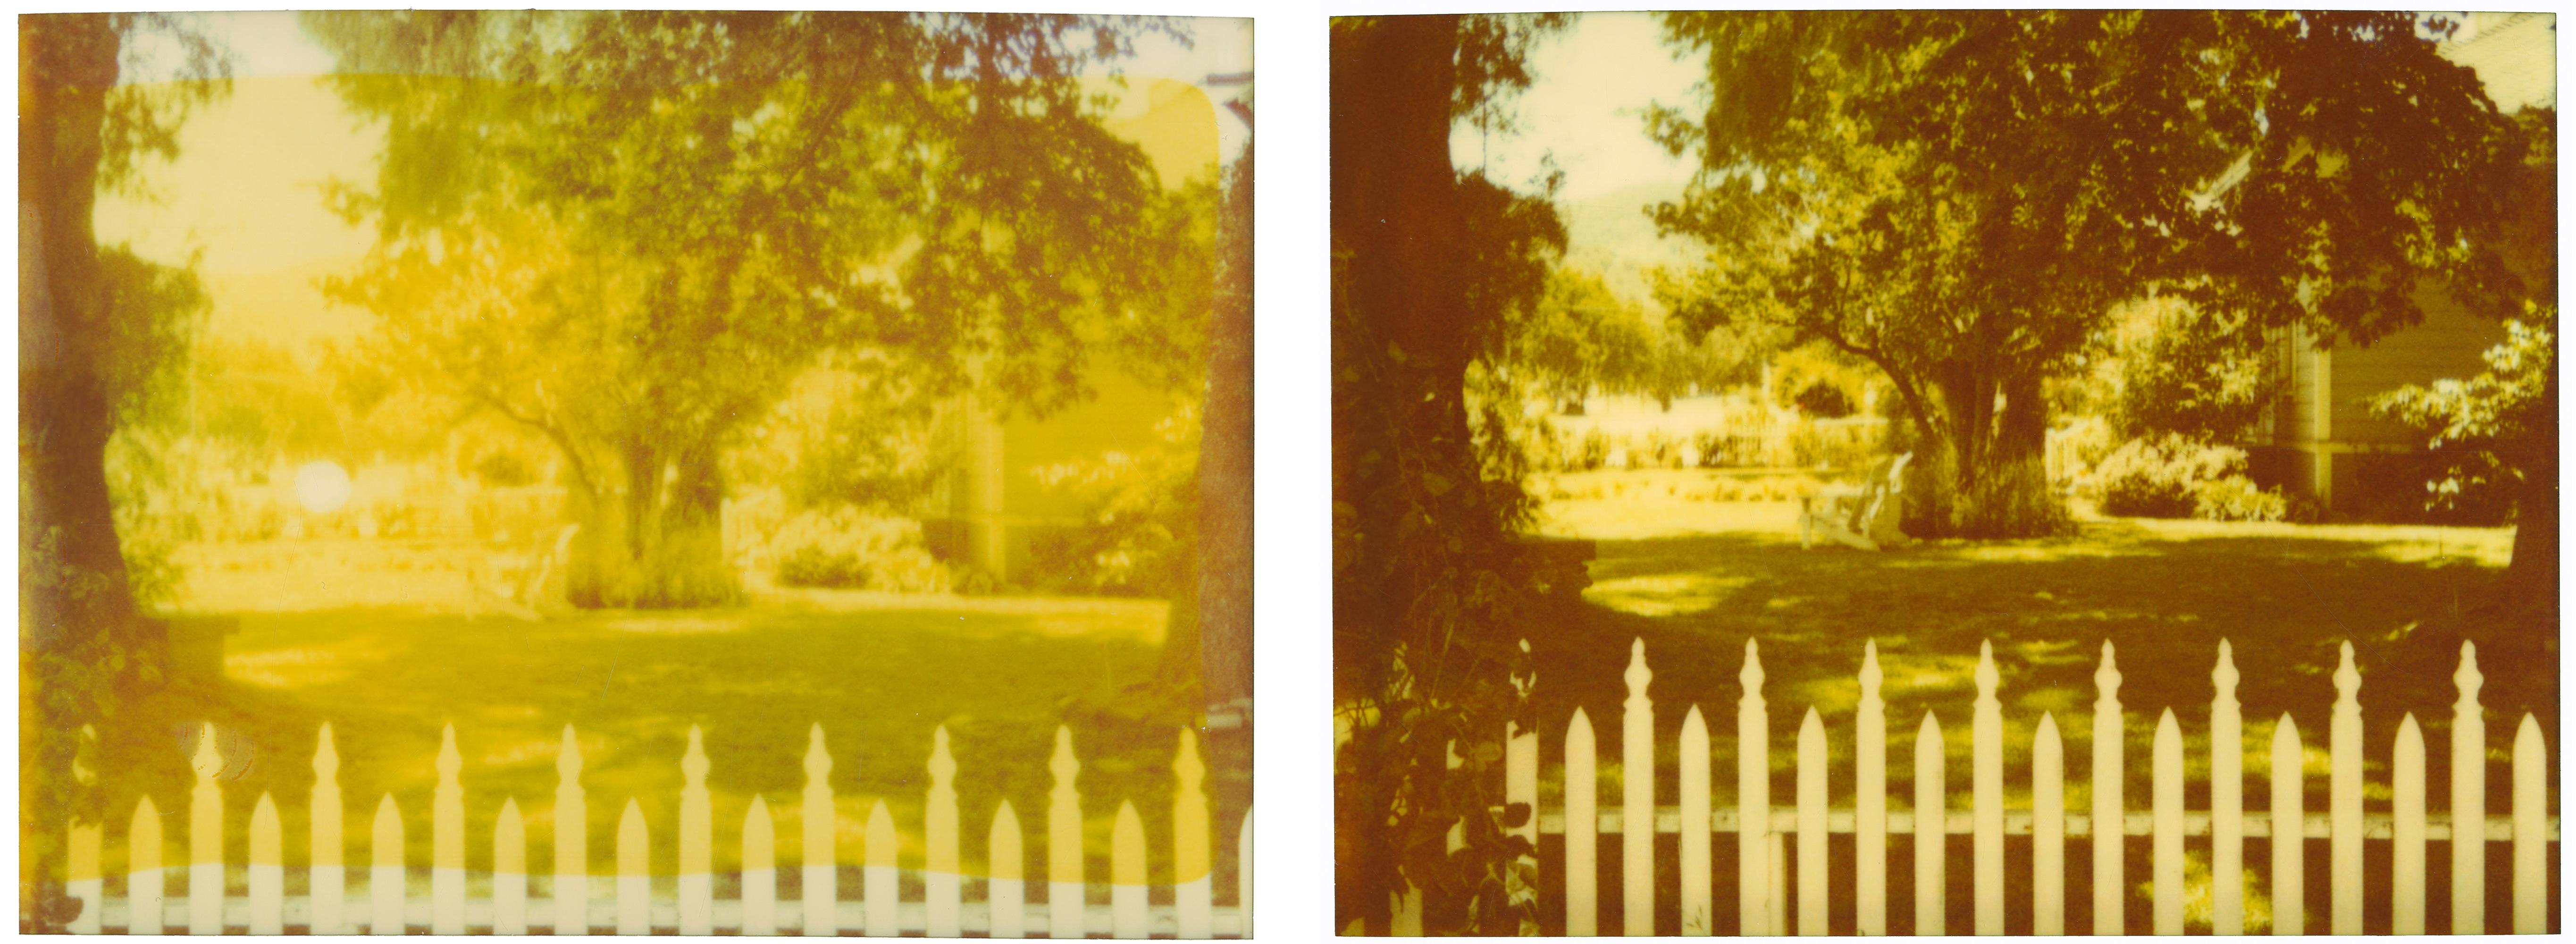 Stefanie Schneider Landscape Photograph - White Picket Fence (Suburbia), diptych, analog, mounted, Polaroid, Photograph